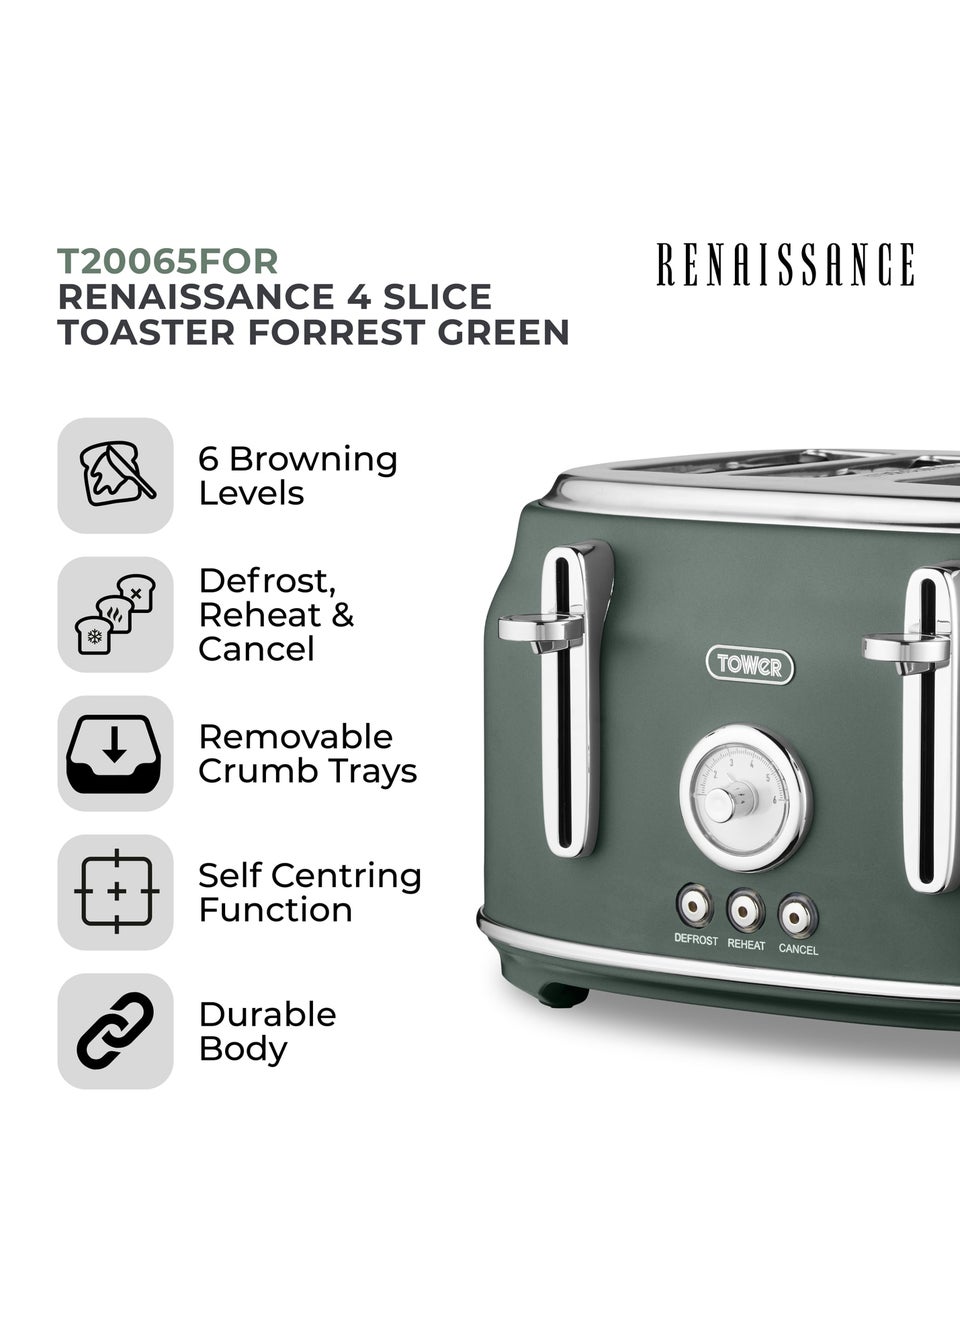 Tower Renaissance 4 Slice Toaster